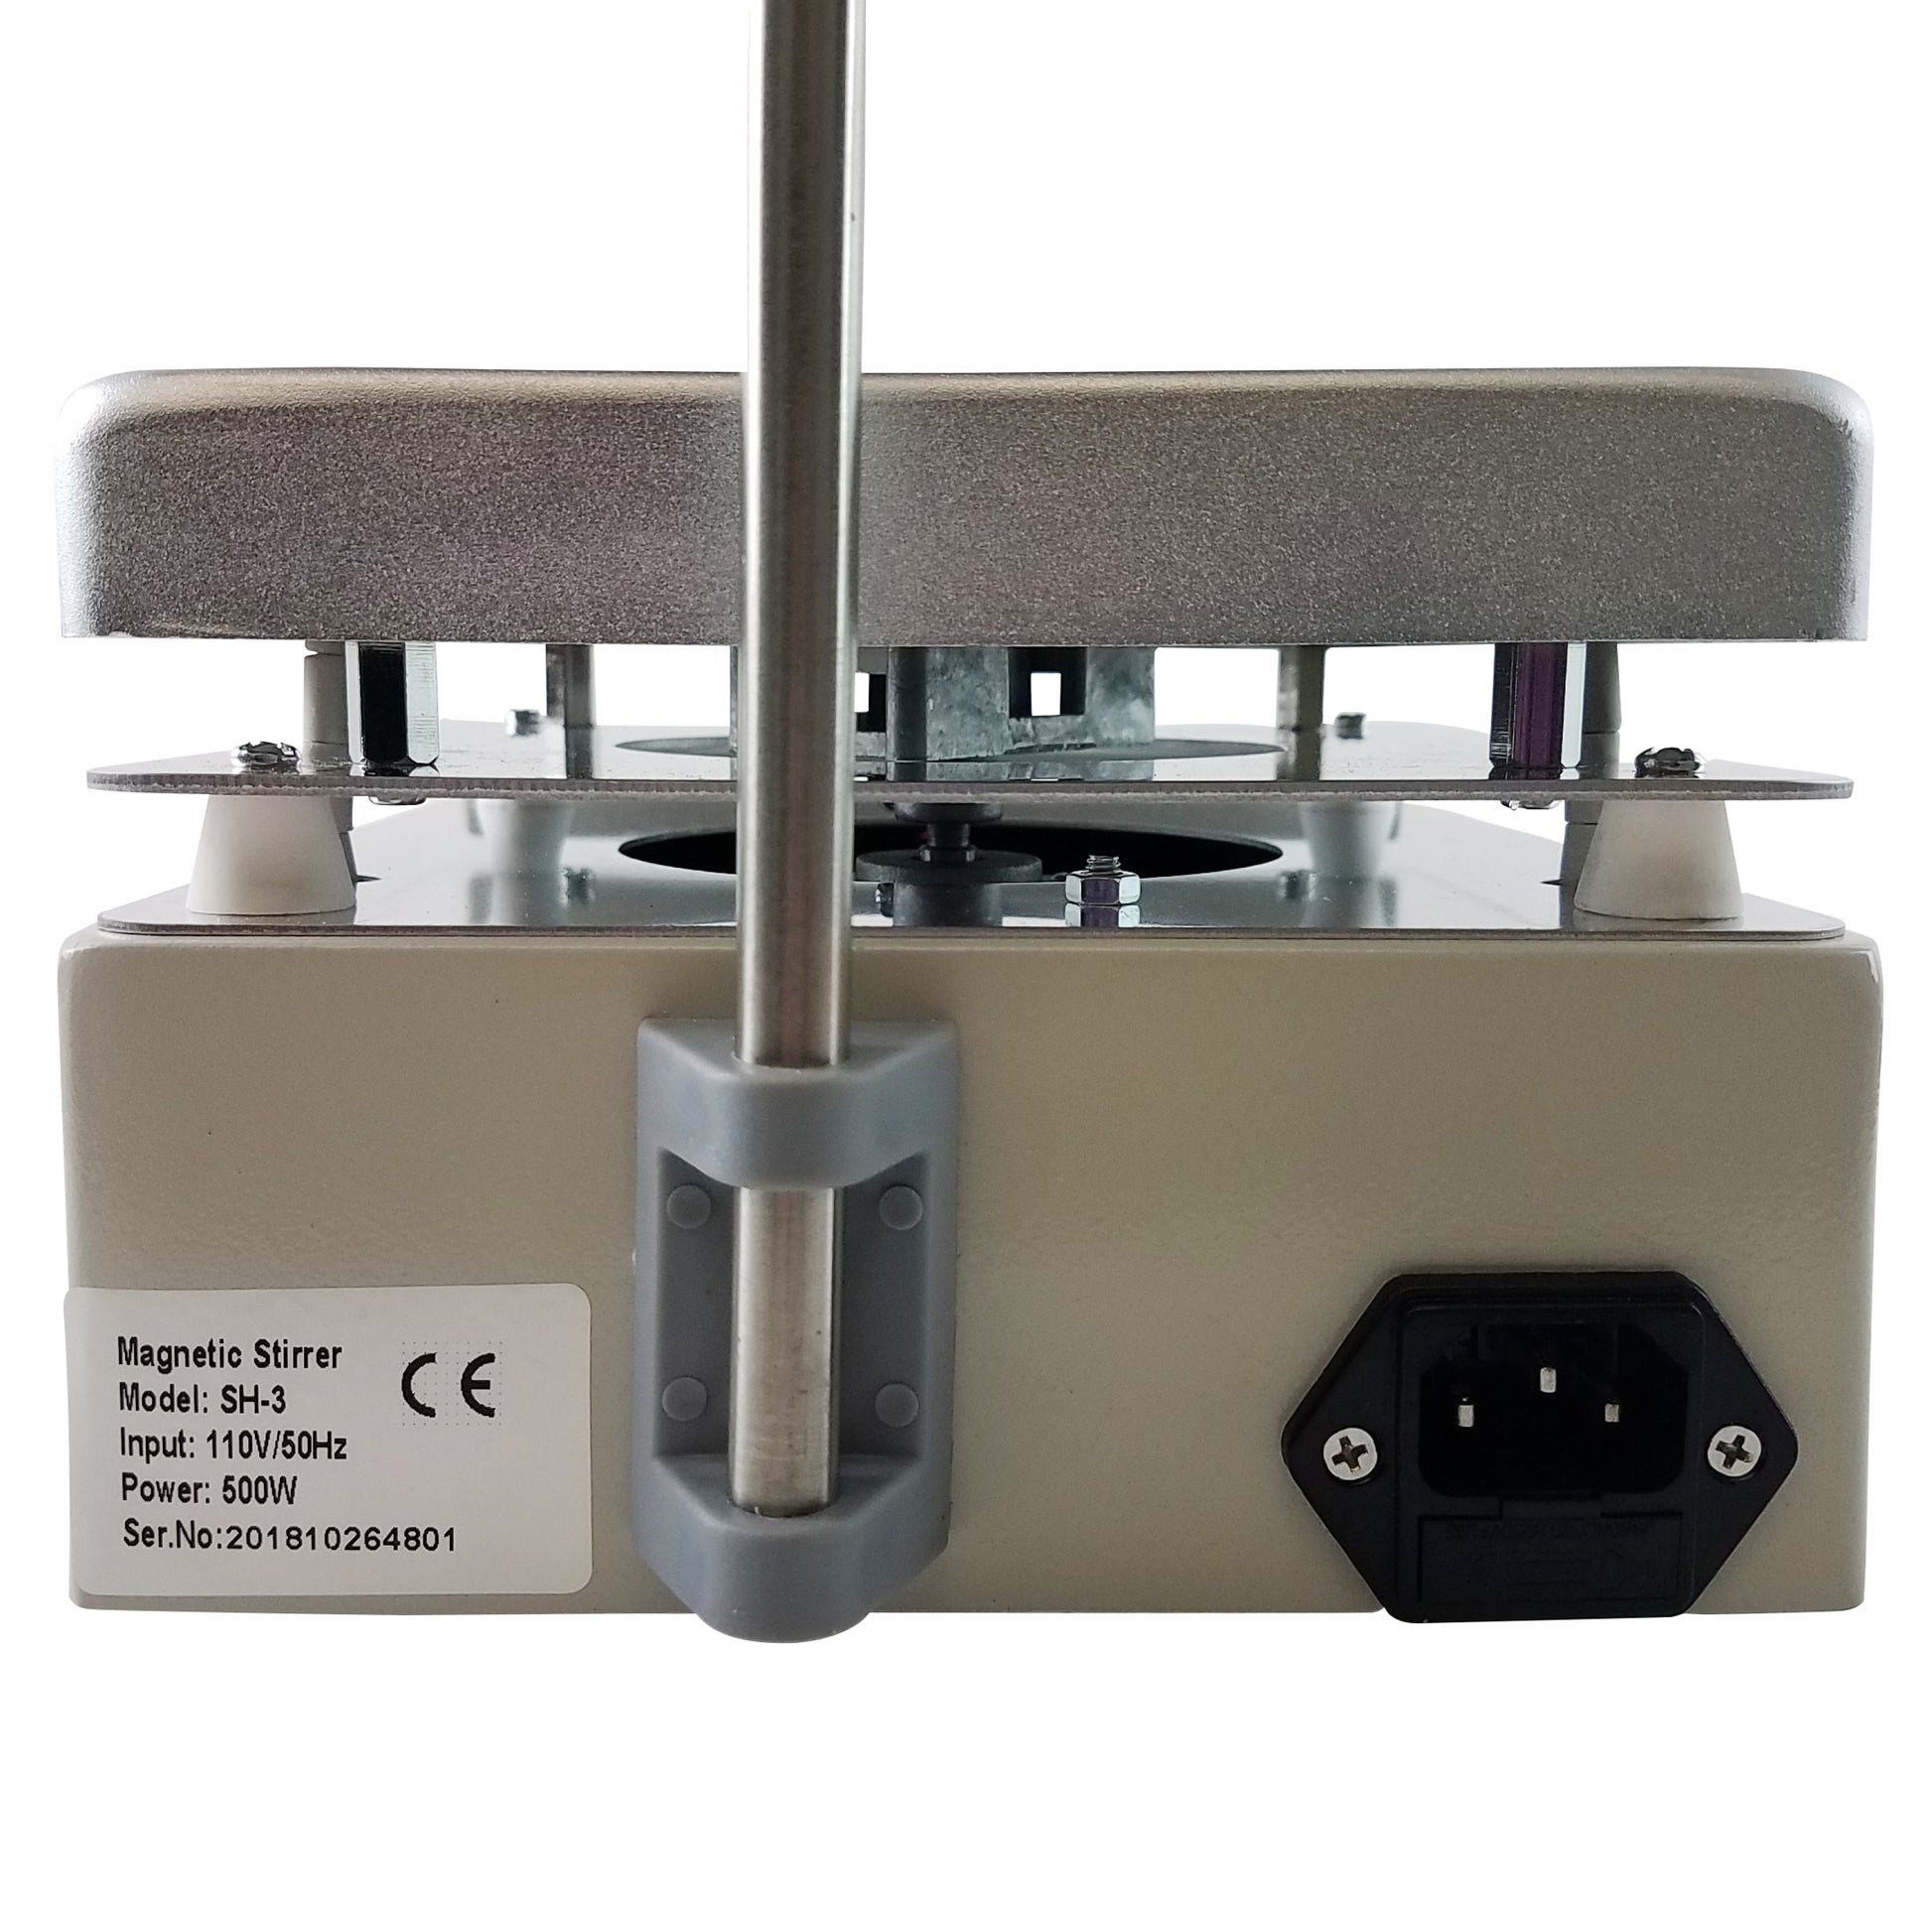 Digital Magnetic Stirrer Hot Plate, ~7x7inch, 600W, 5L Capacity